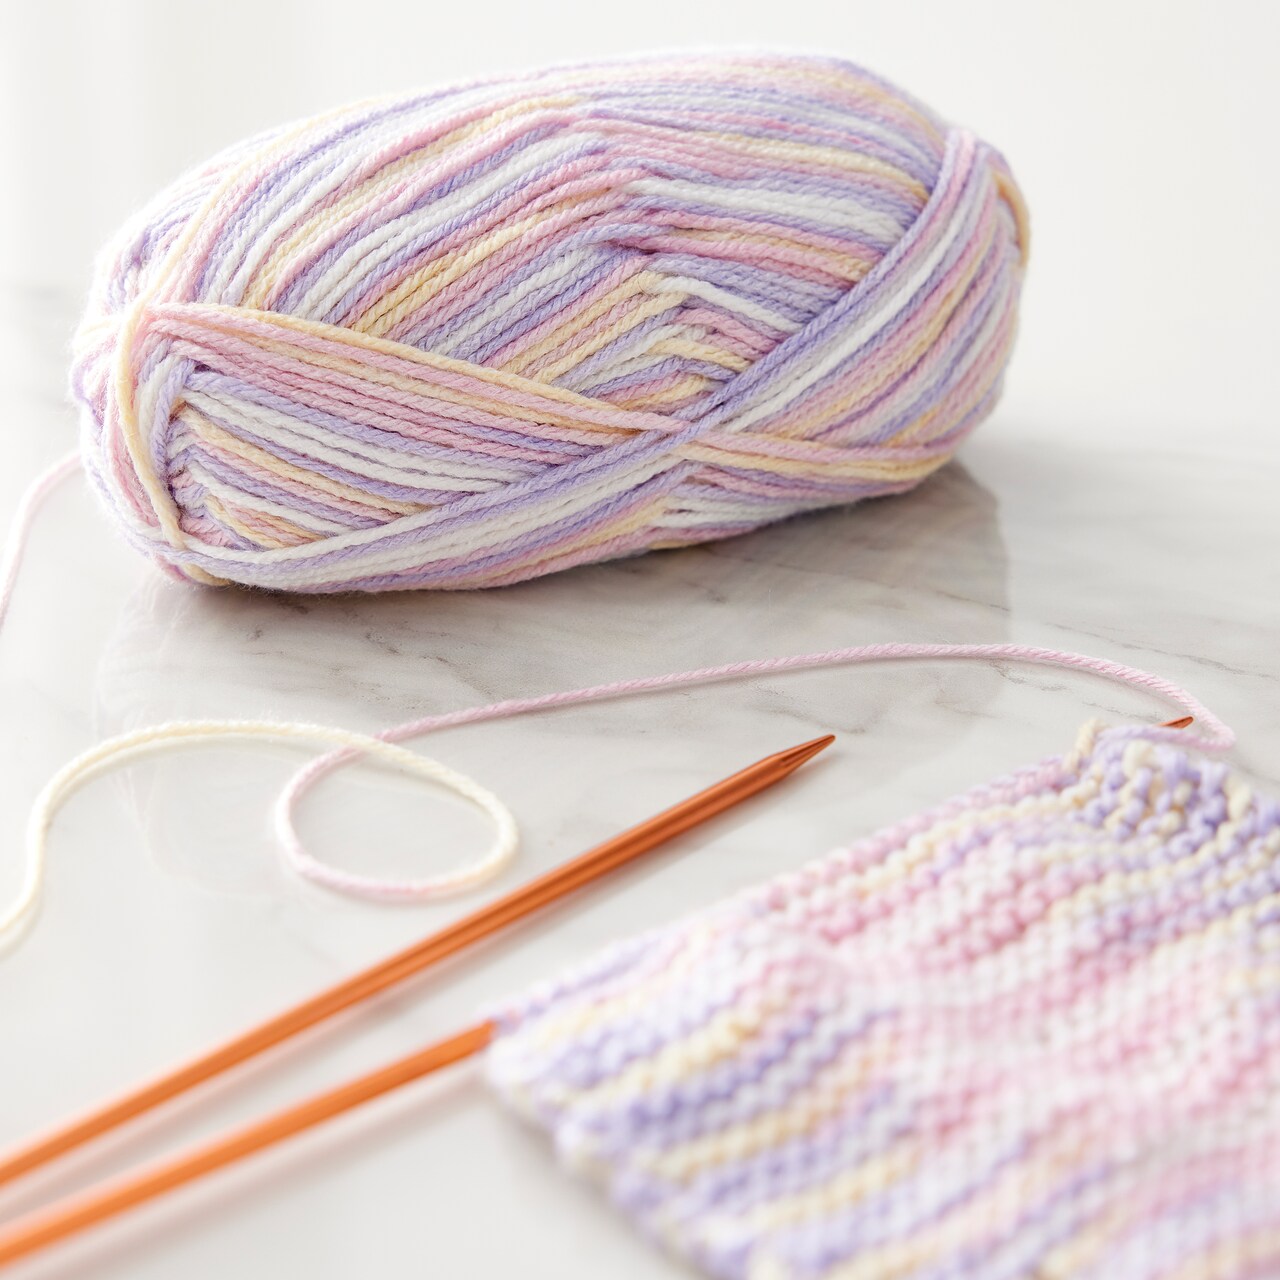 Prym Ergonomics Double Point Knitting Needles Set